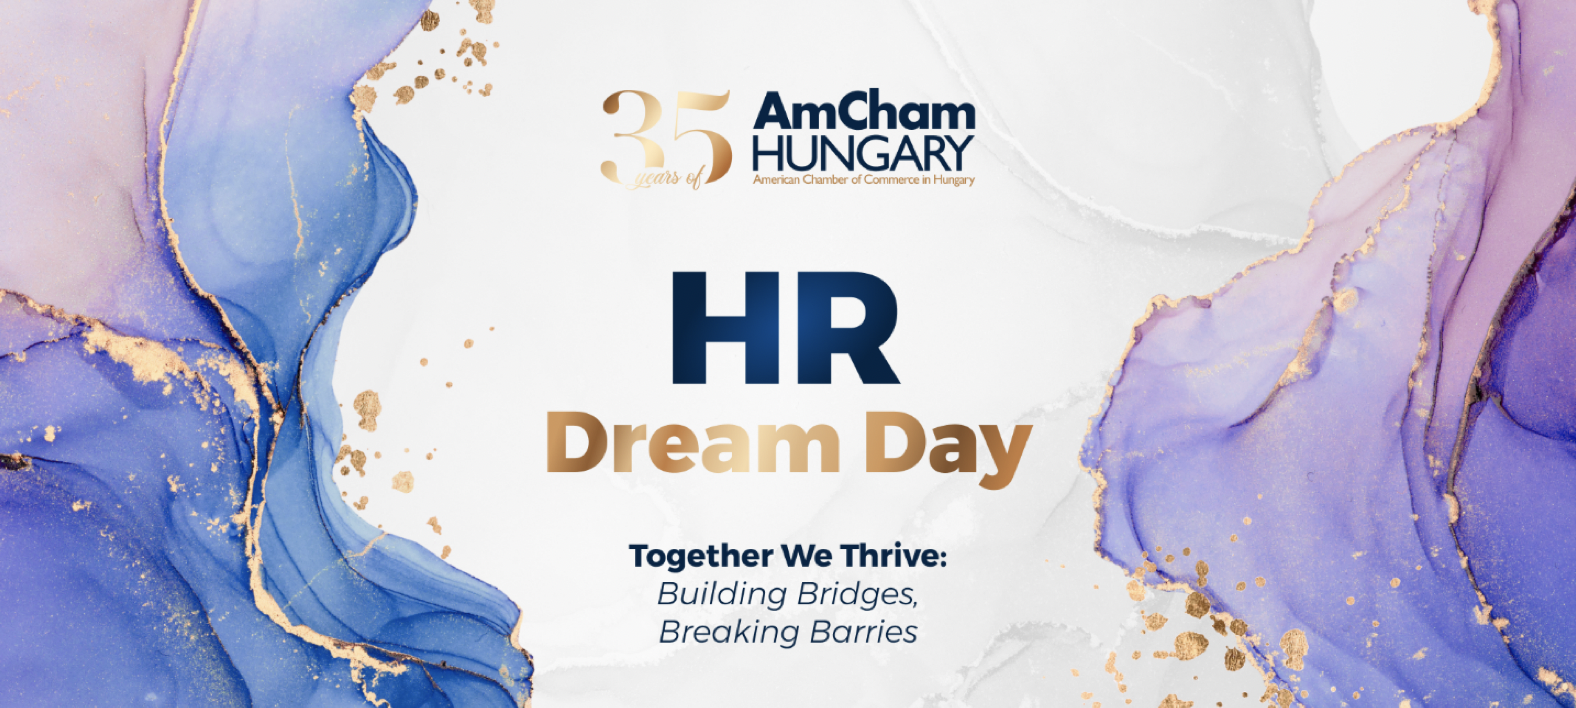 Diversity in Focus at AmCham Hungary's HR Dream Day